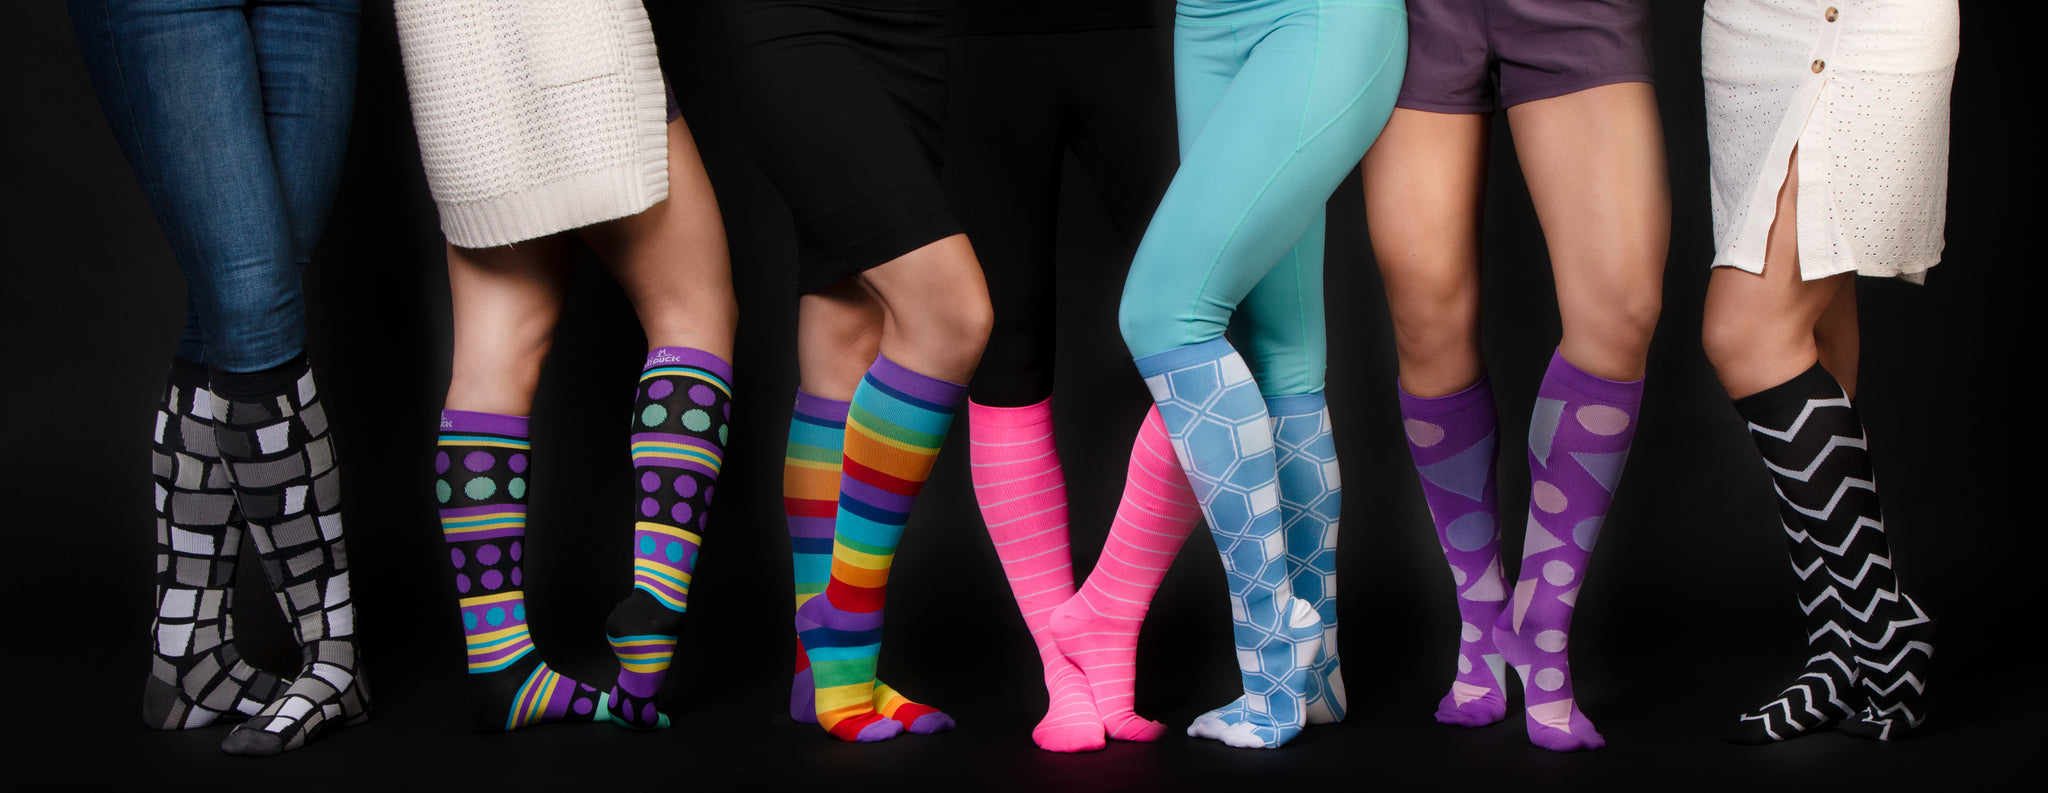 Hamilton's Nurses Benefit From Wearing Compression Socks